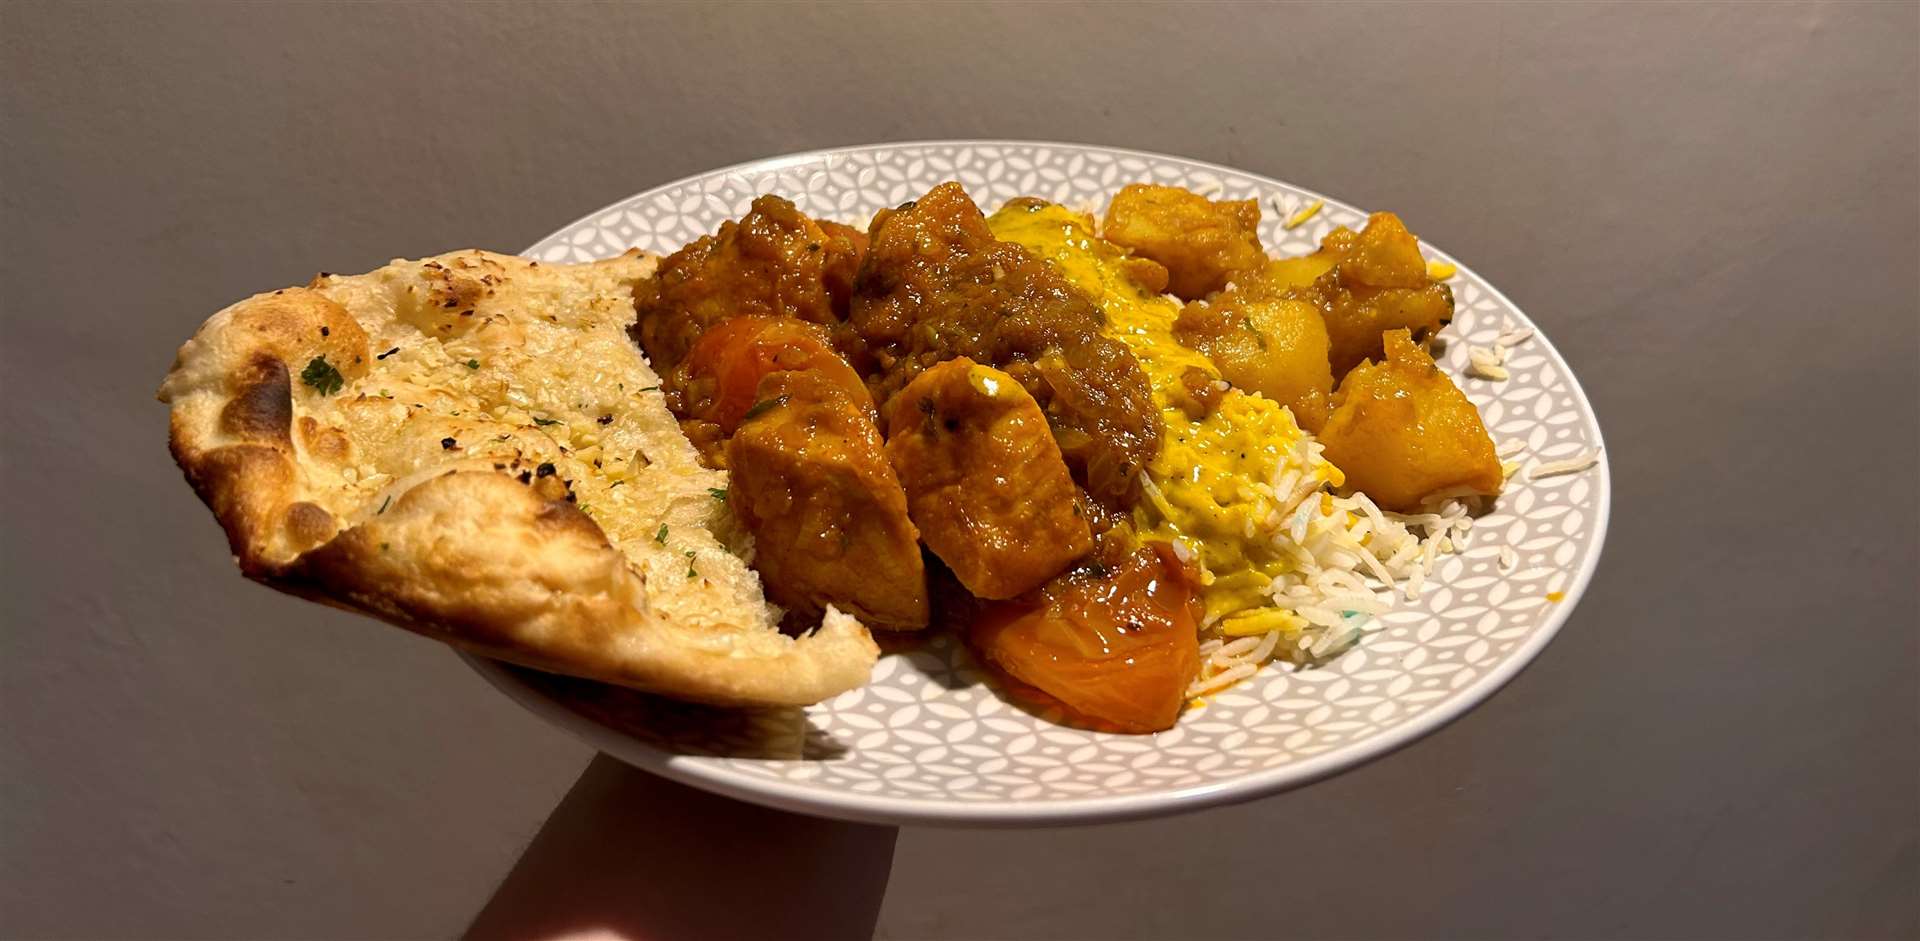 Garlic naan, chicken patia, egg fried rice, Bombay potatoes from Masala Bay